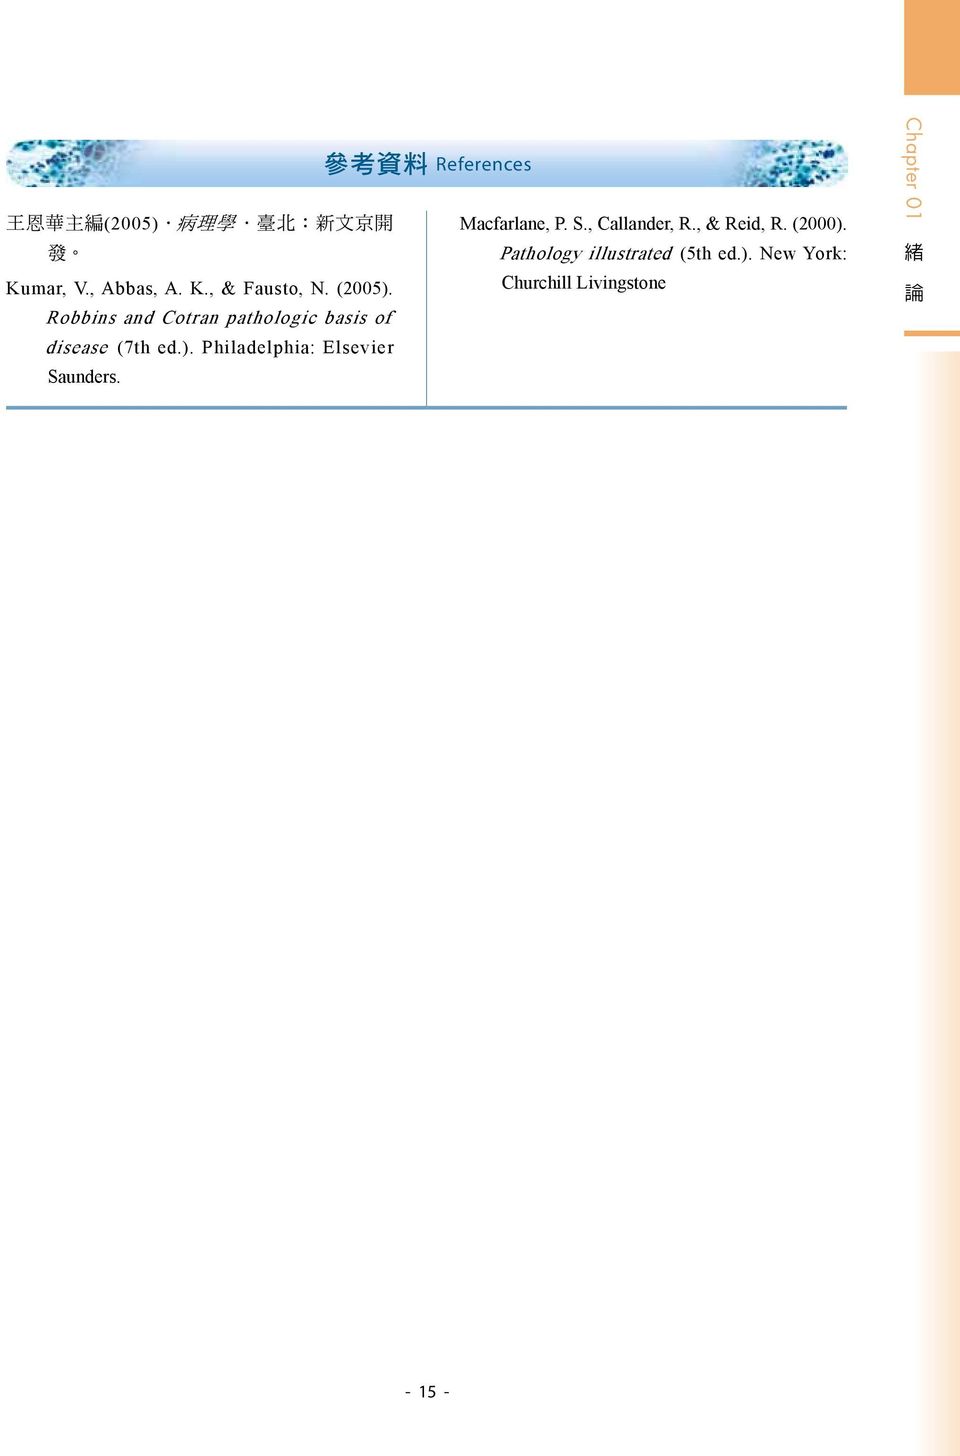 Robbins and Cotran pathologic basis of disease (7th ed.).